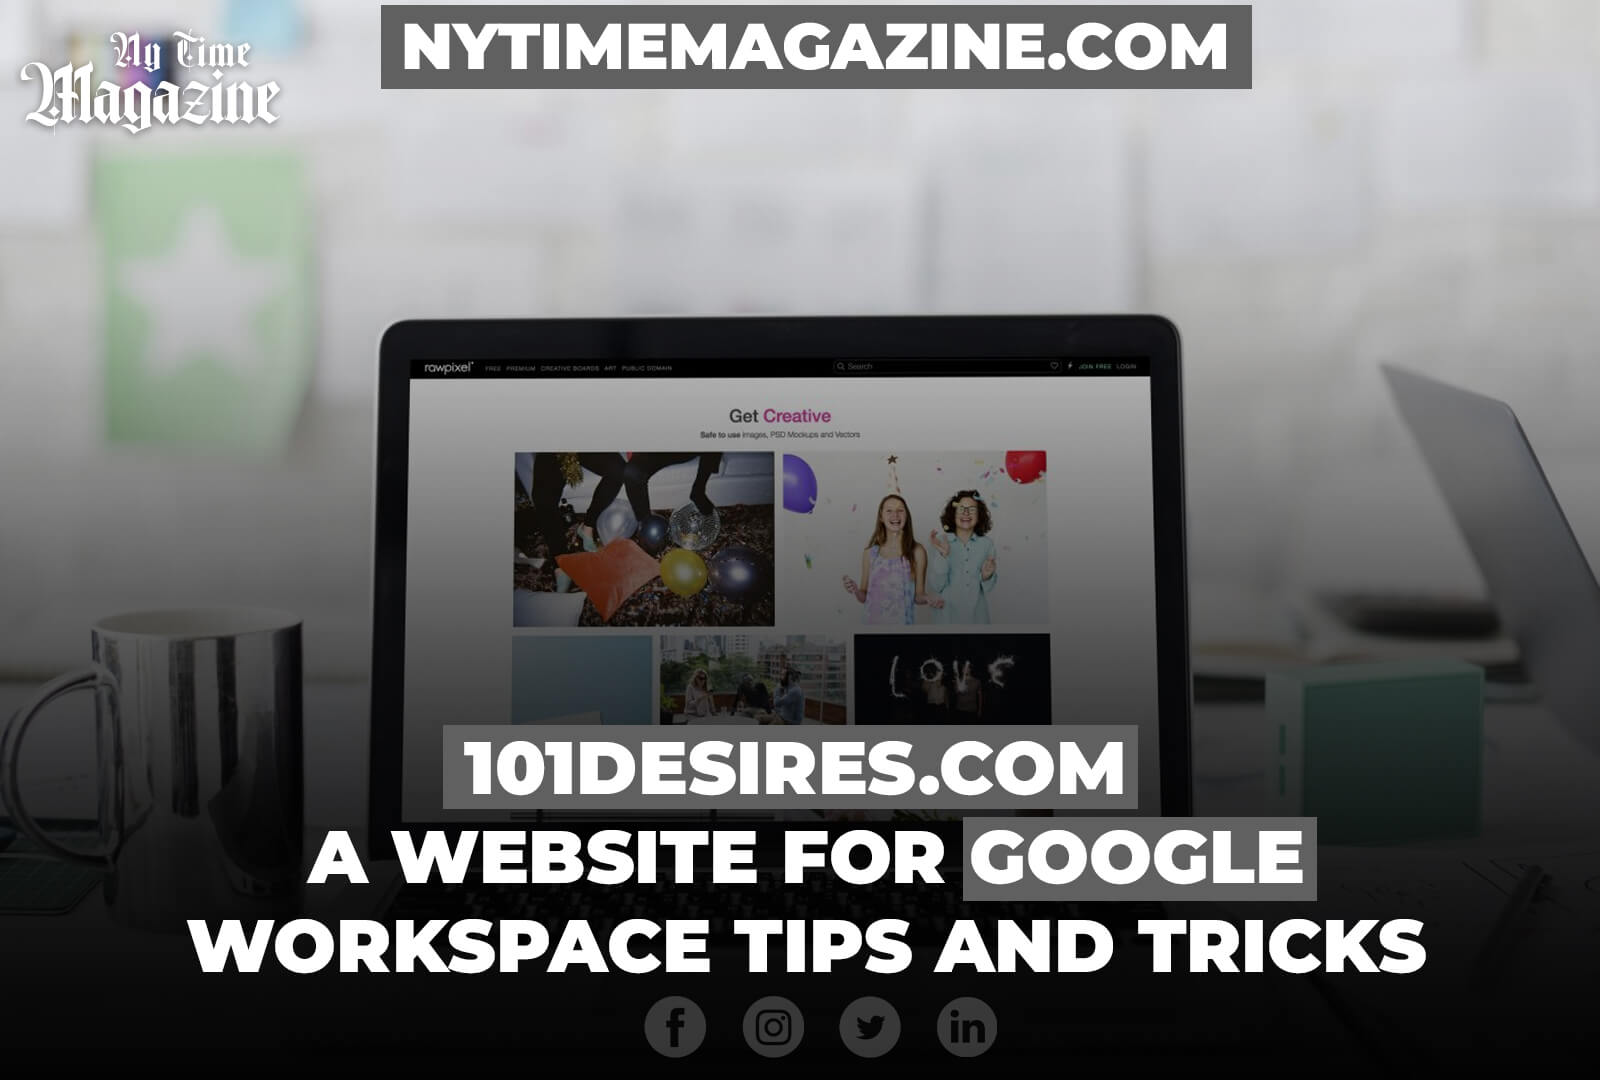 101DESIRES.COM: A WEBSITE FOR GOOGLE WORKSPACE TIPS AND TRICKS